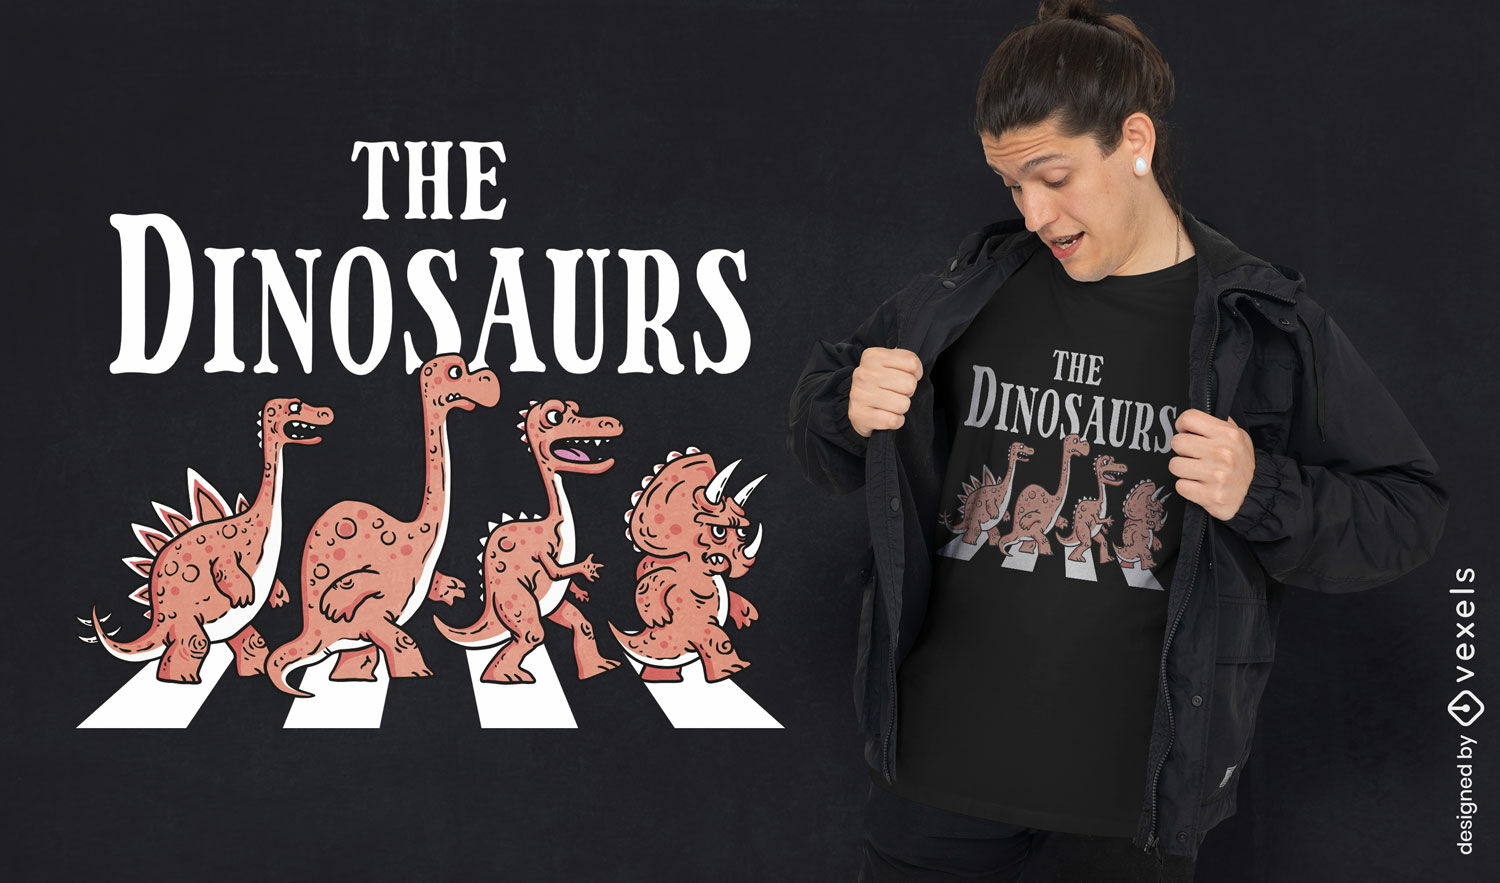 The dinosaurs parody t-shirt design